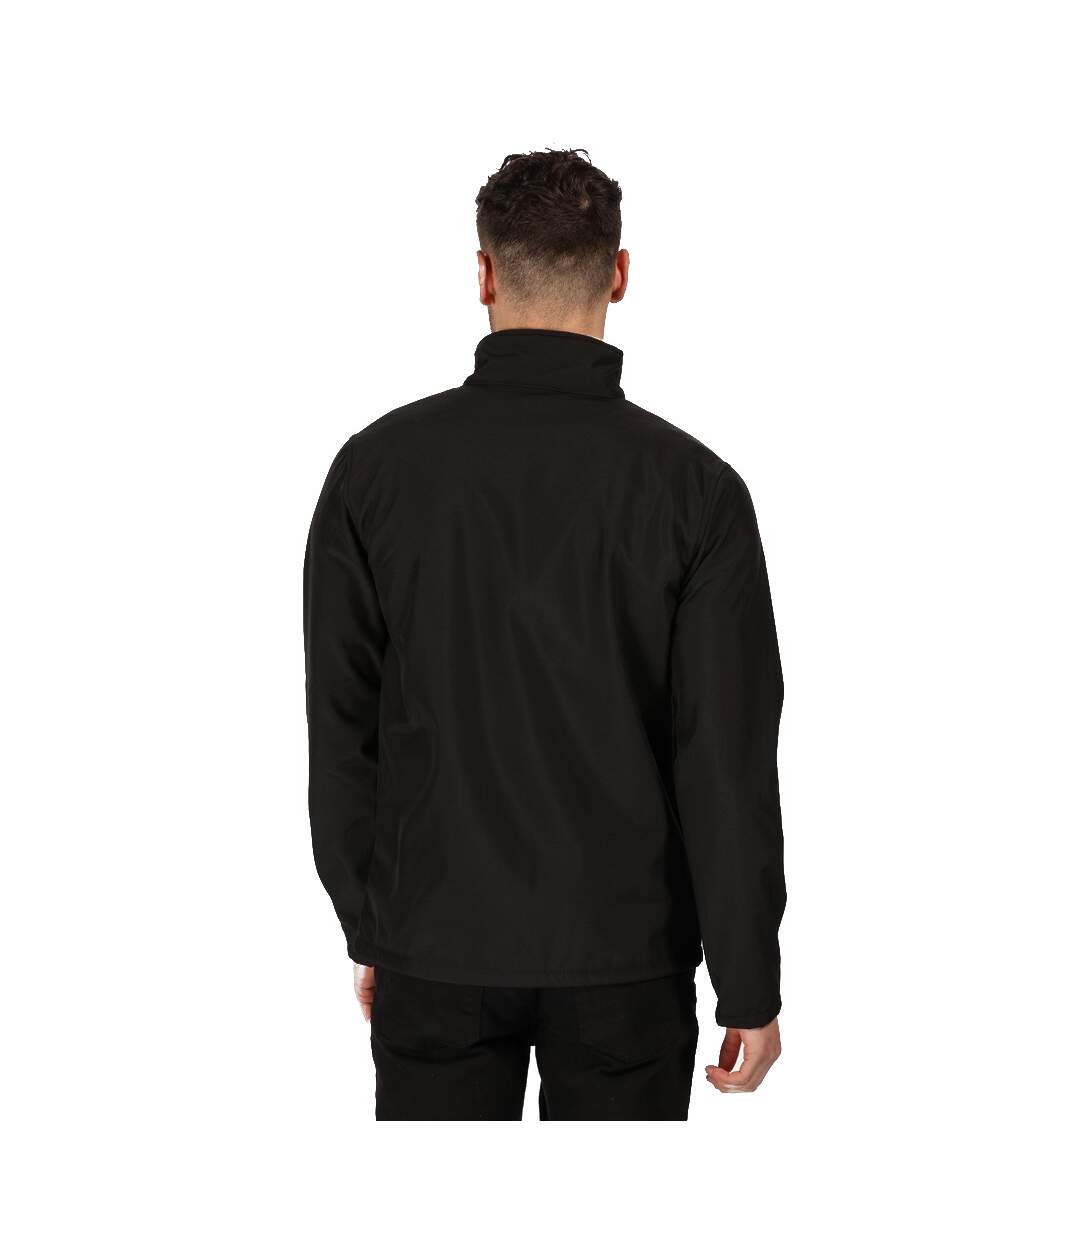 Regatta Professional Mens Ablaze Three Layer Soft Shell Jacket (Black/Black) - UTPC4061